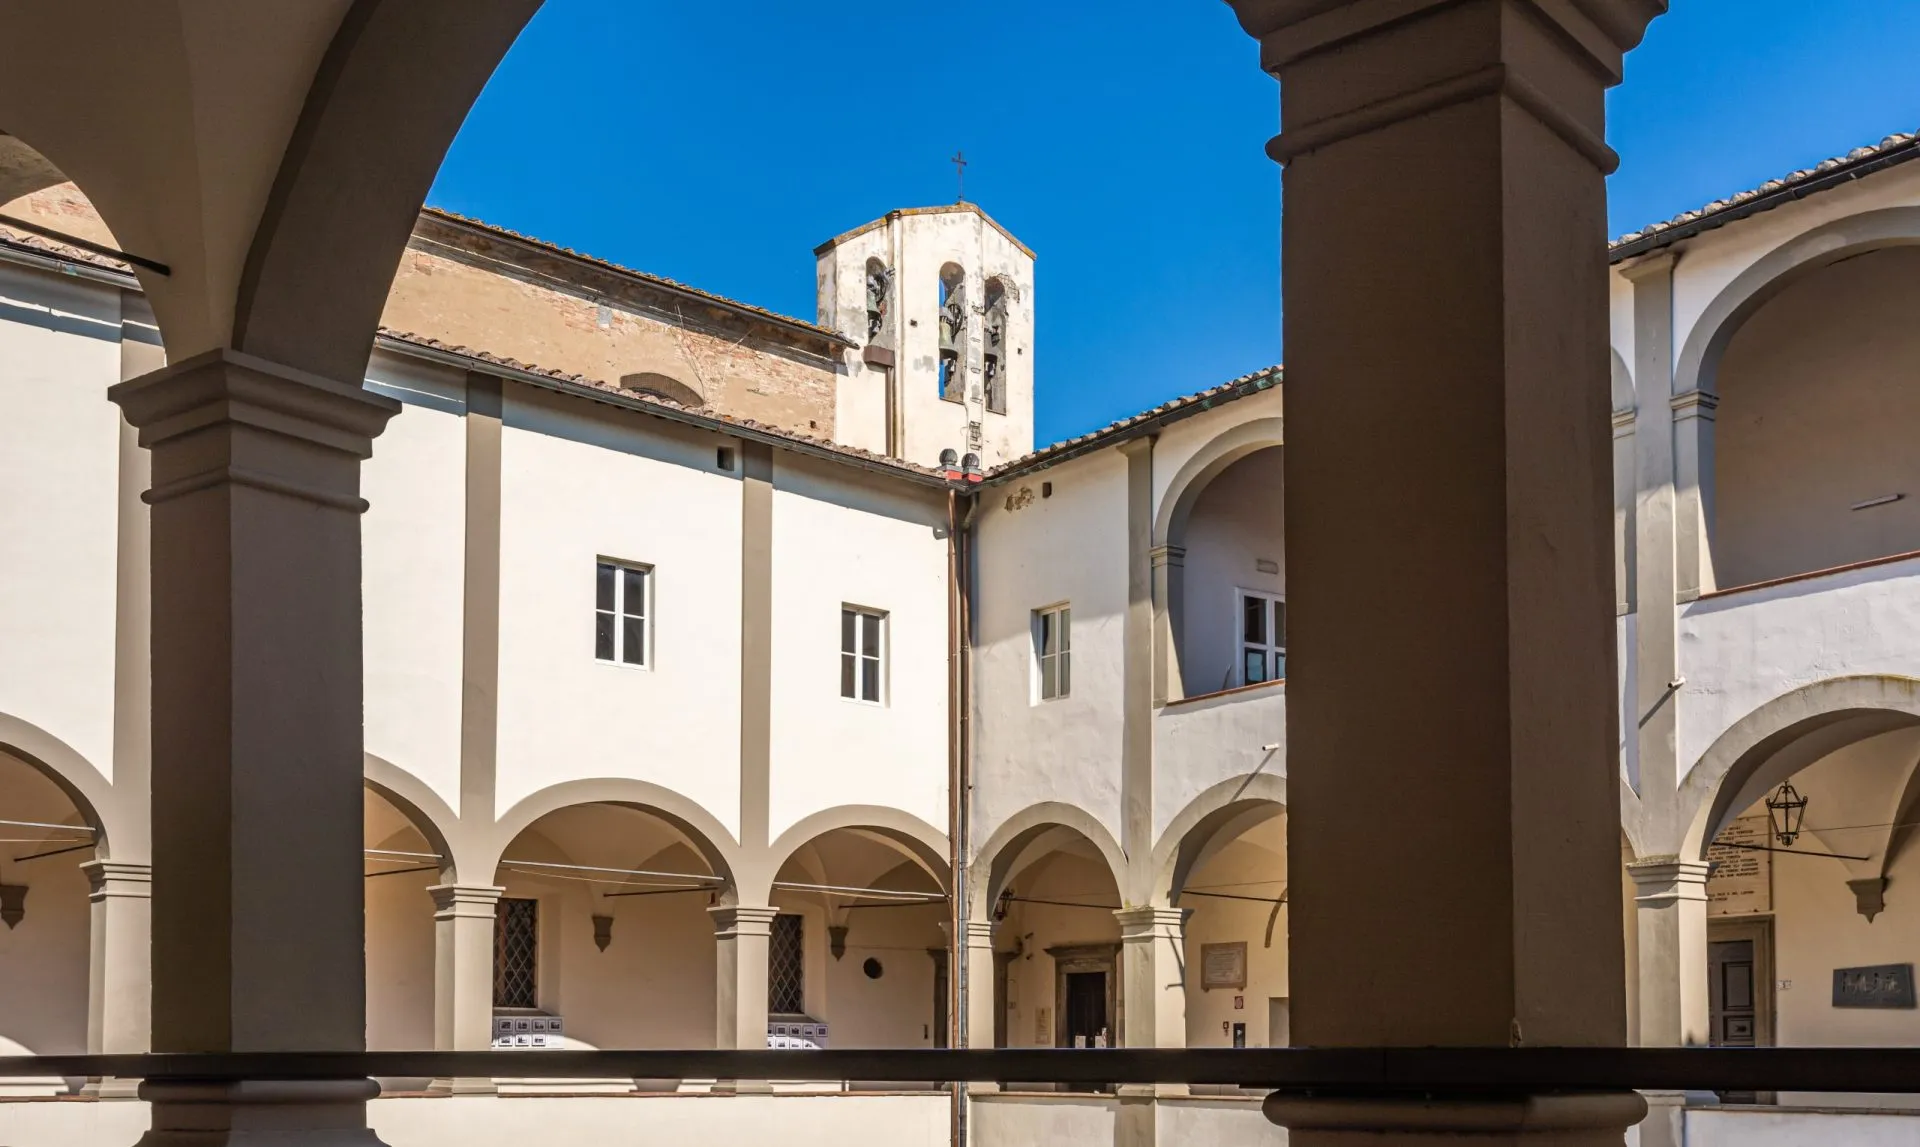 cloister of the historic San Domenico church - San Miniato, Pisa province, Tuscany region in central Italy - May 31, 2021